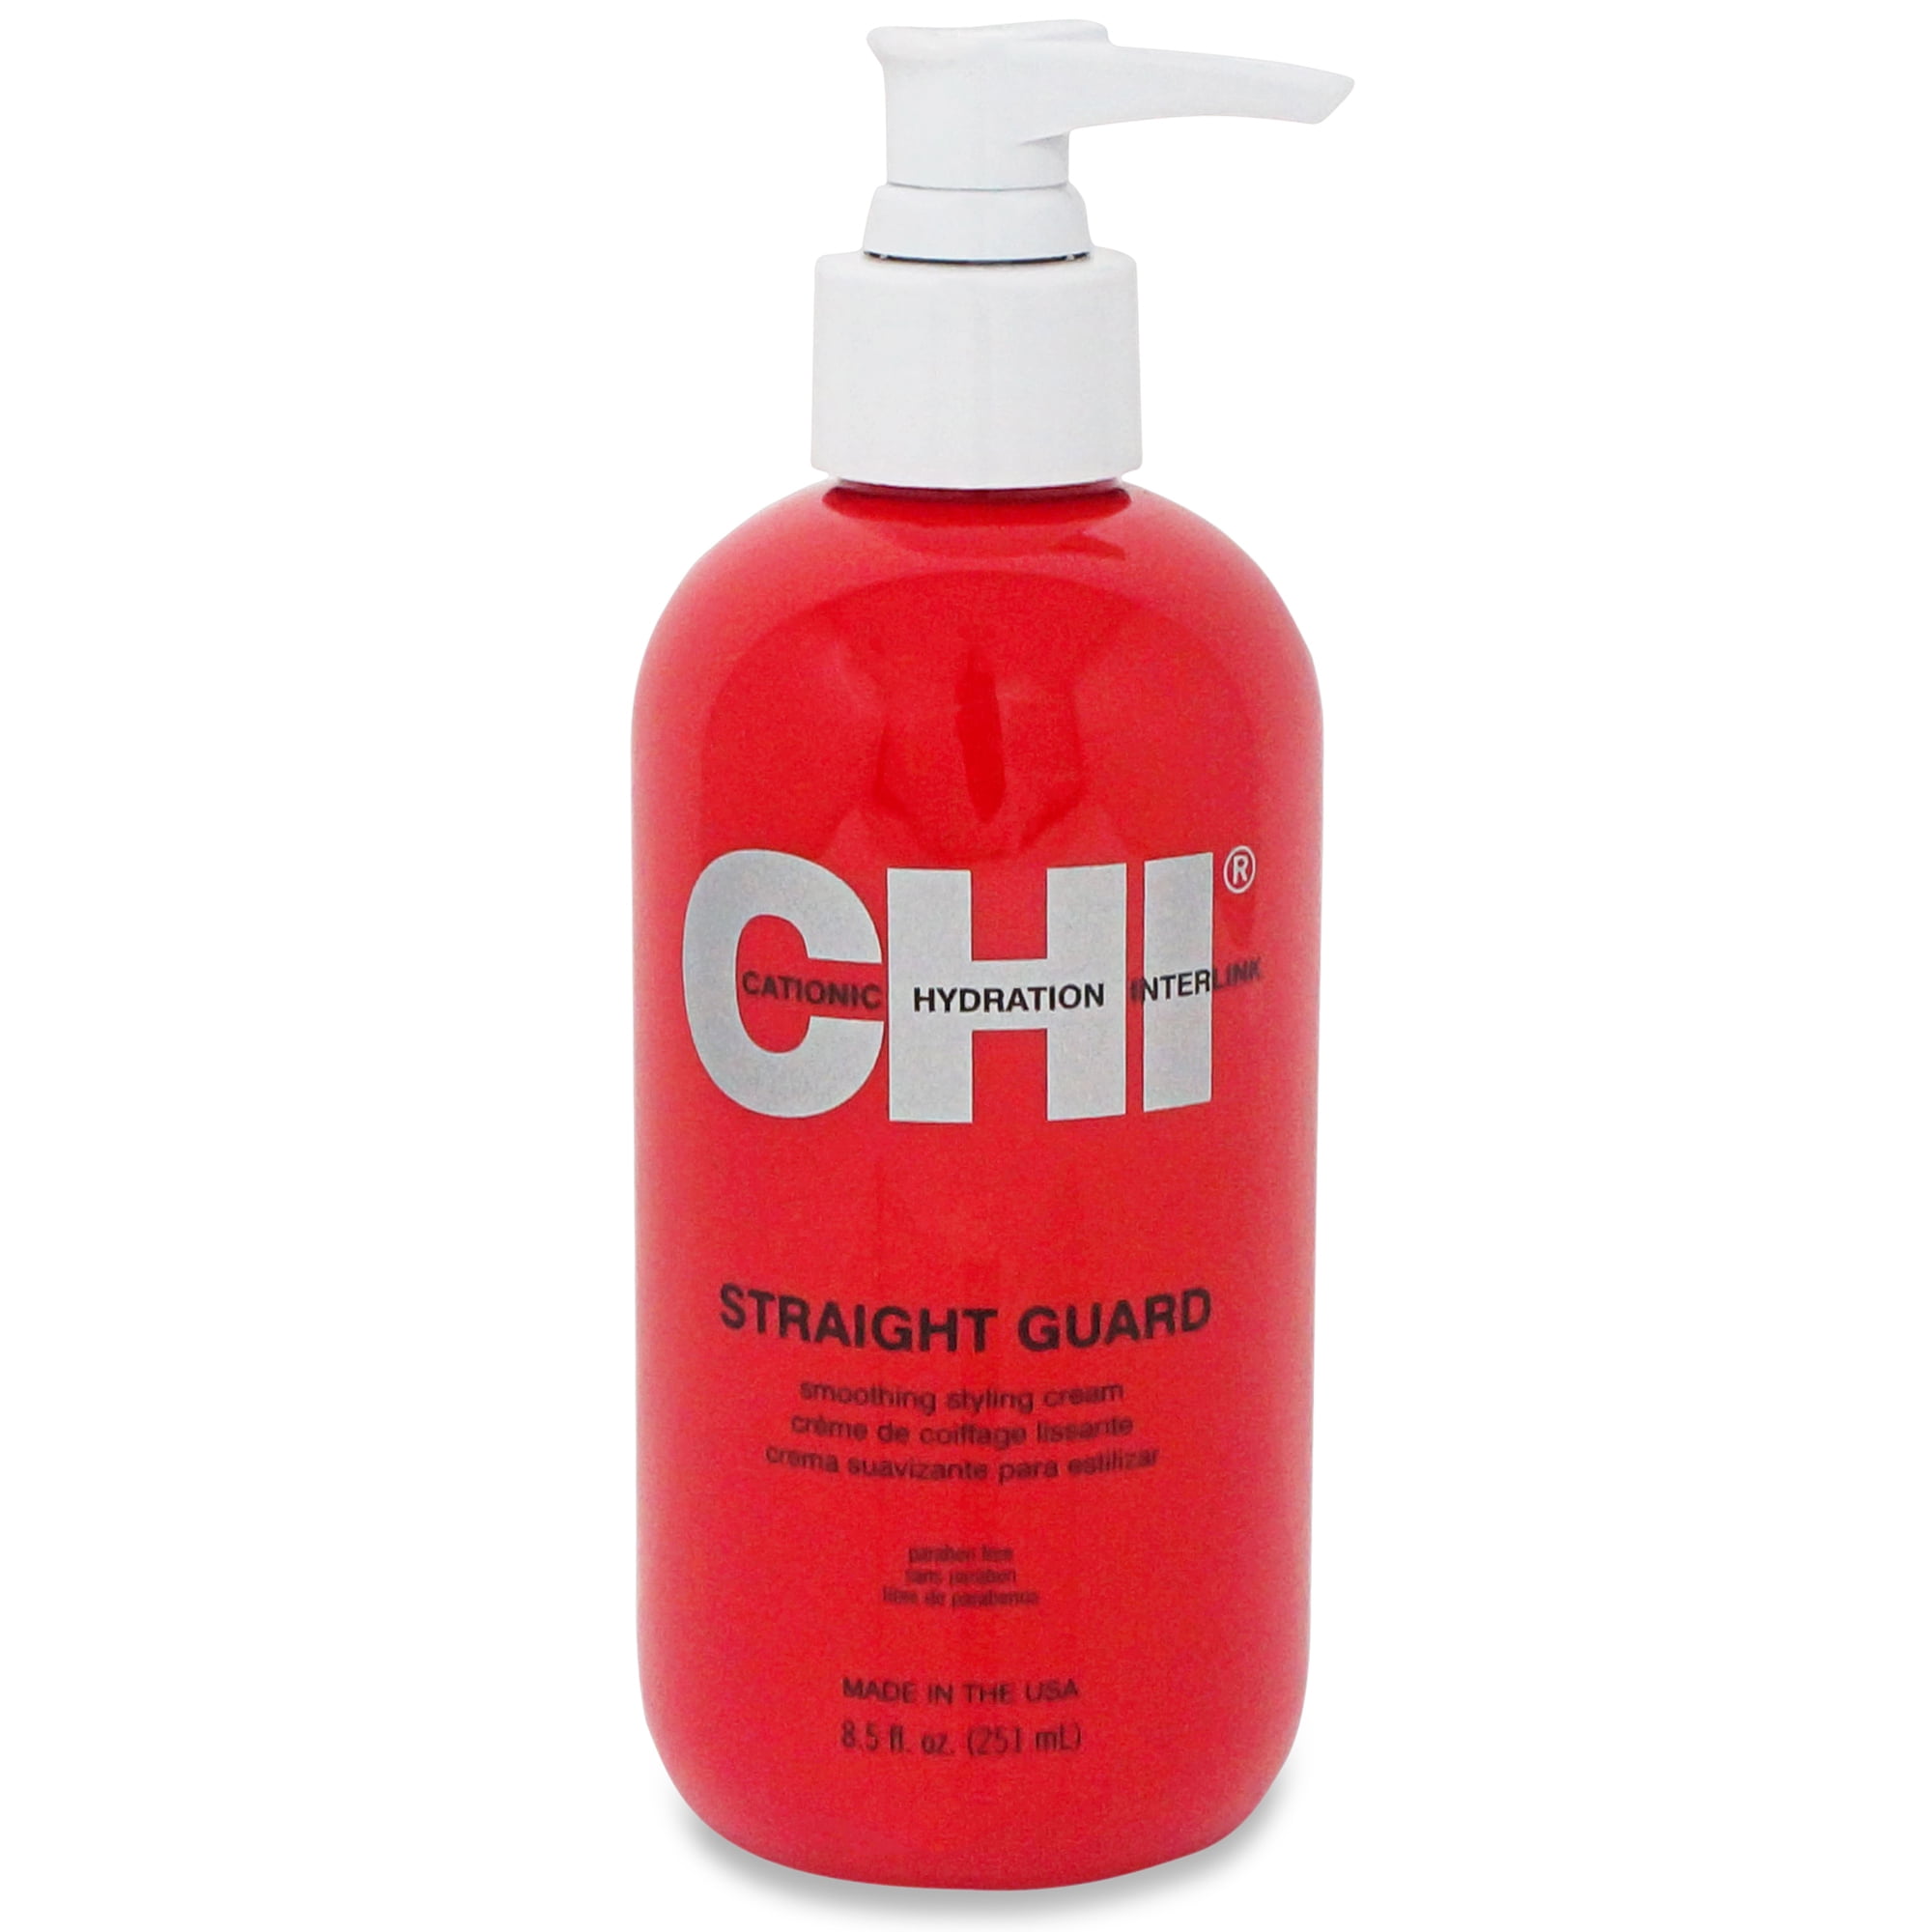 CHI Straight Guard Smoothing Styling Cream, 8.5 FL OZ - Walmart.com